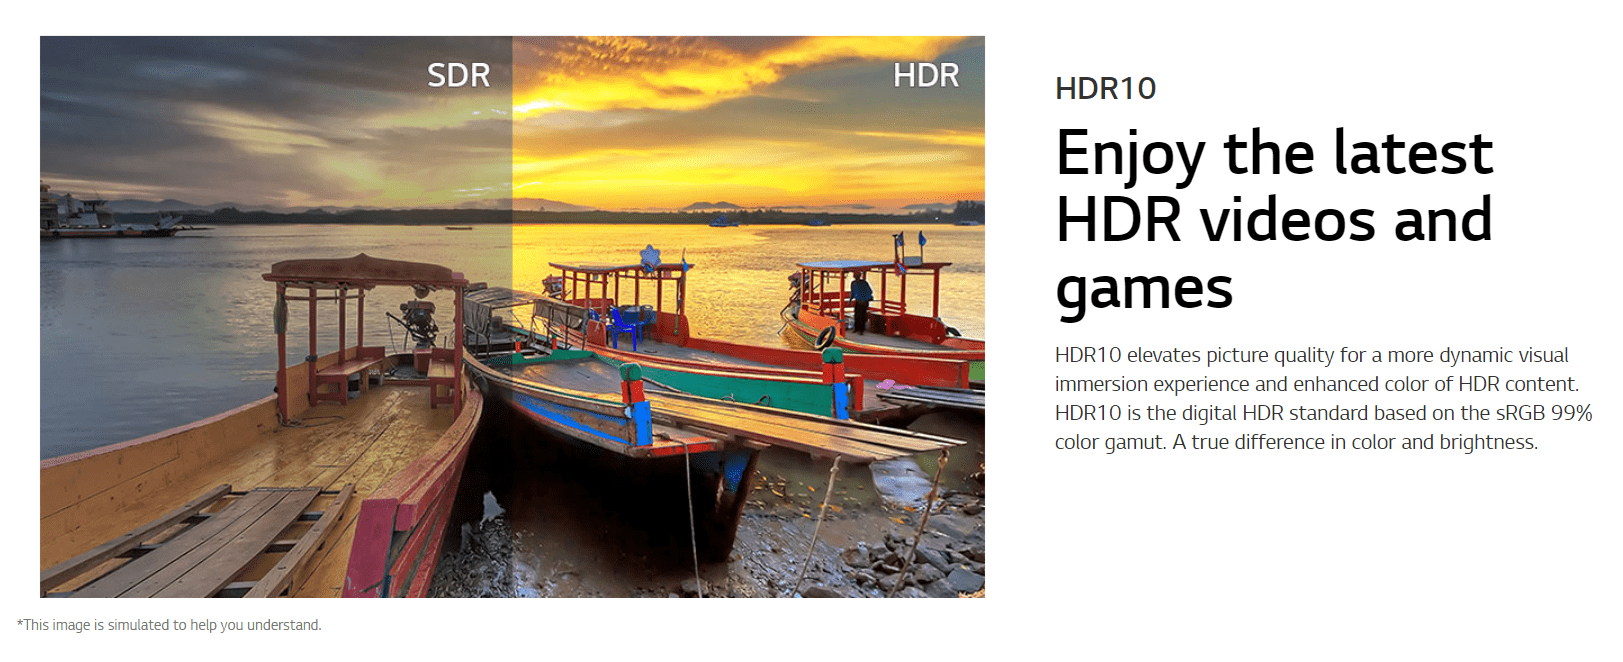 29 UltraWide™ Full HD (2560x1080) HDR IPS Monitor - 29WN600-W